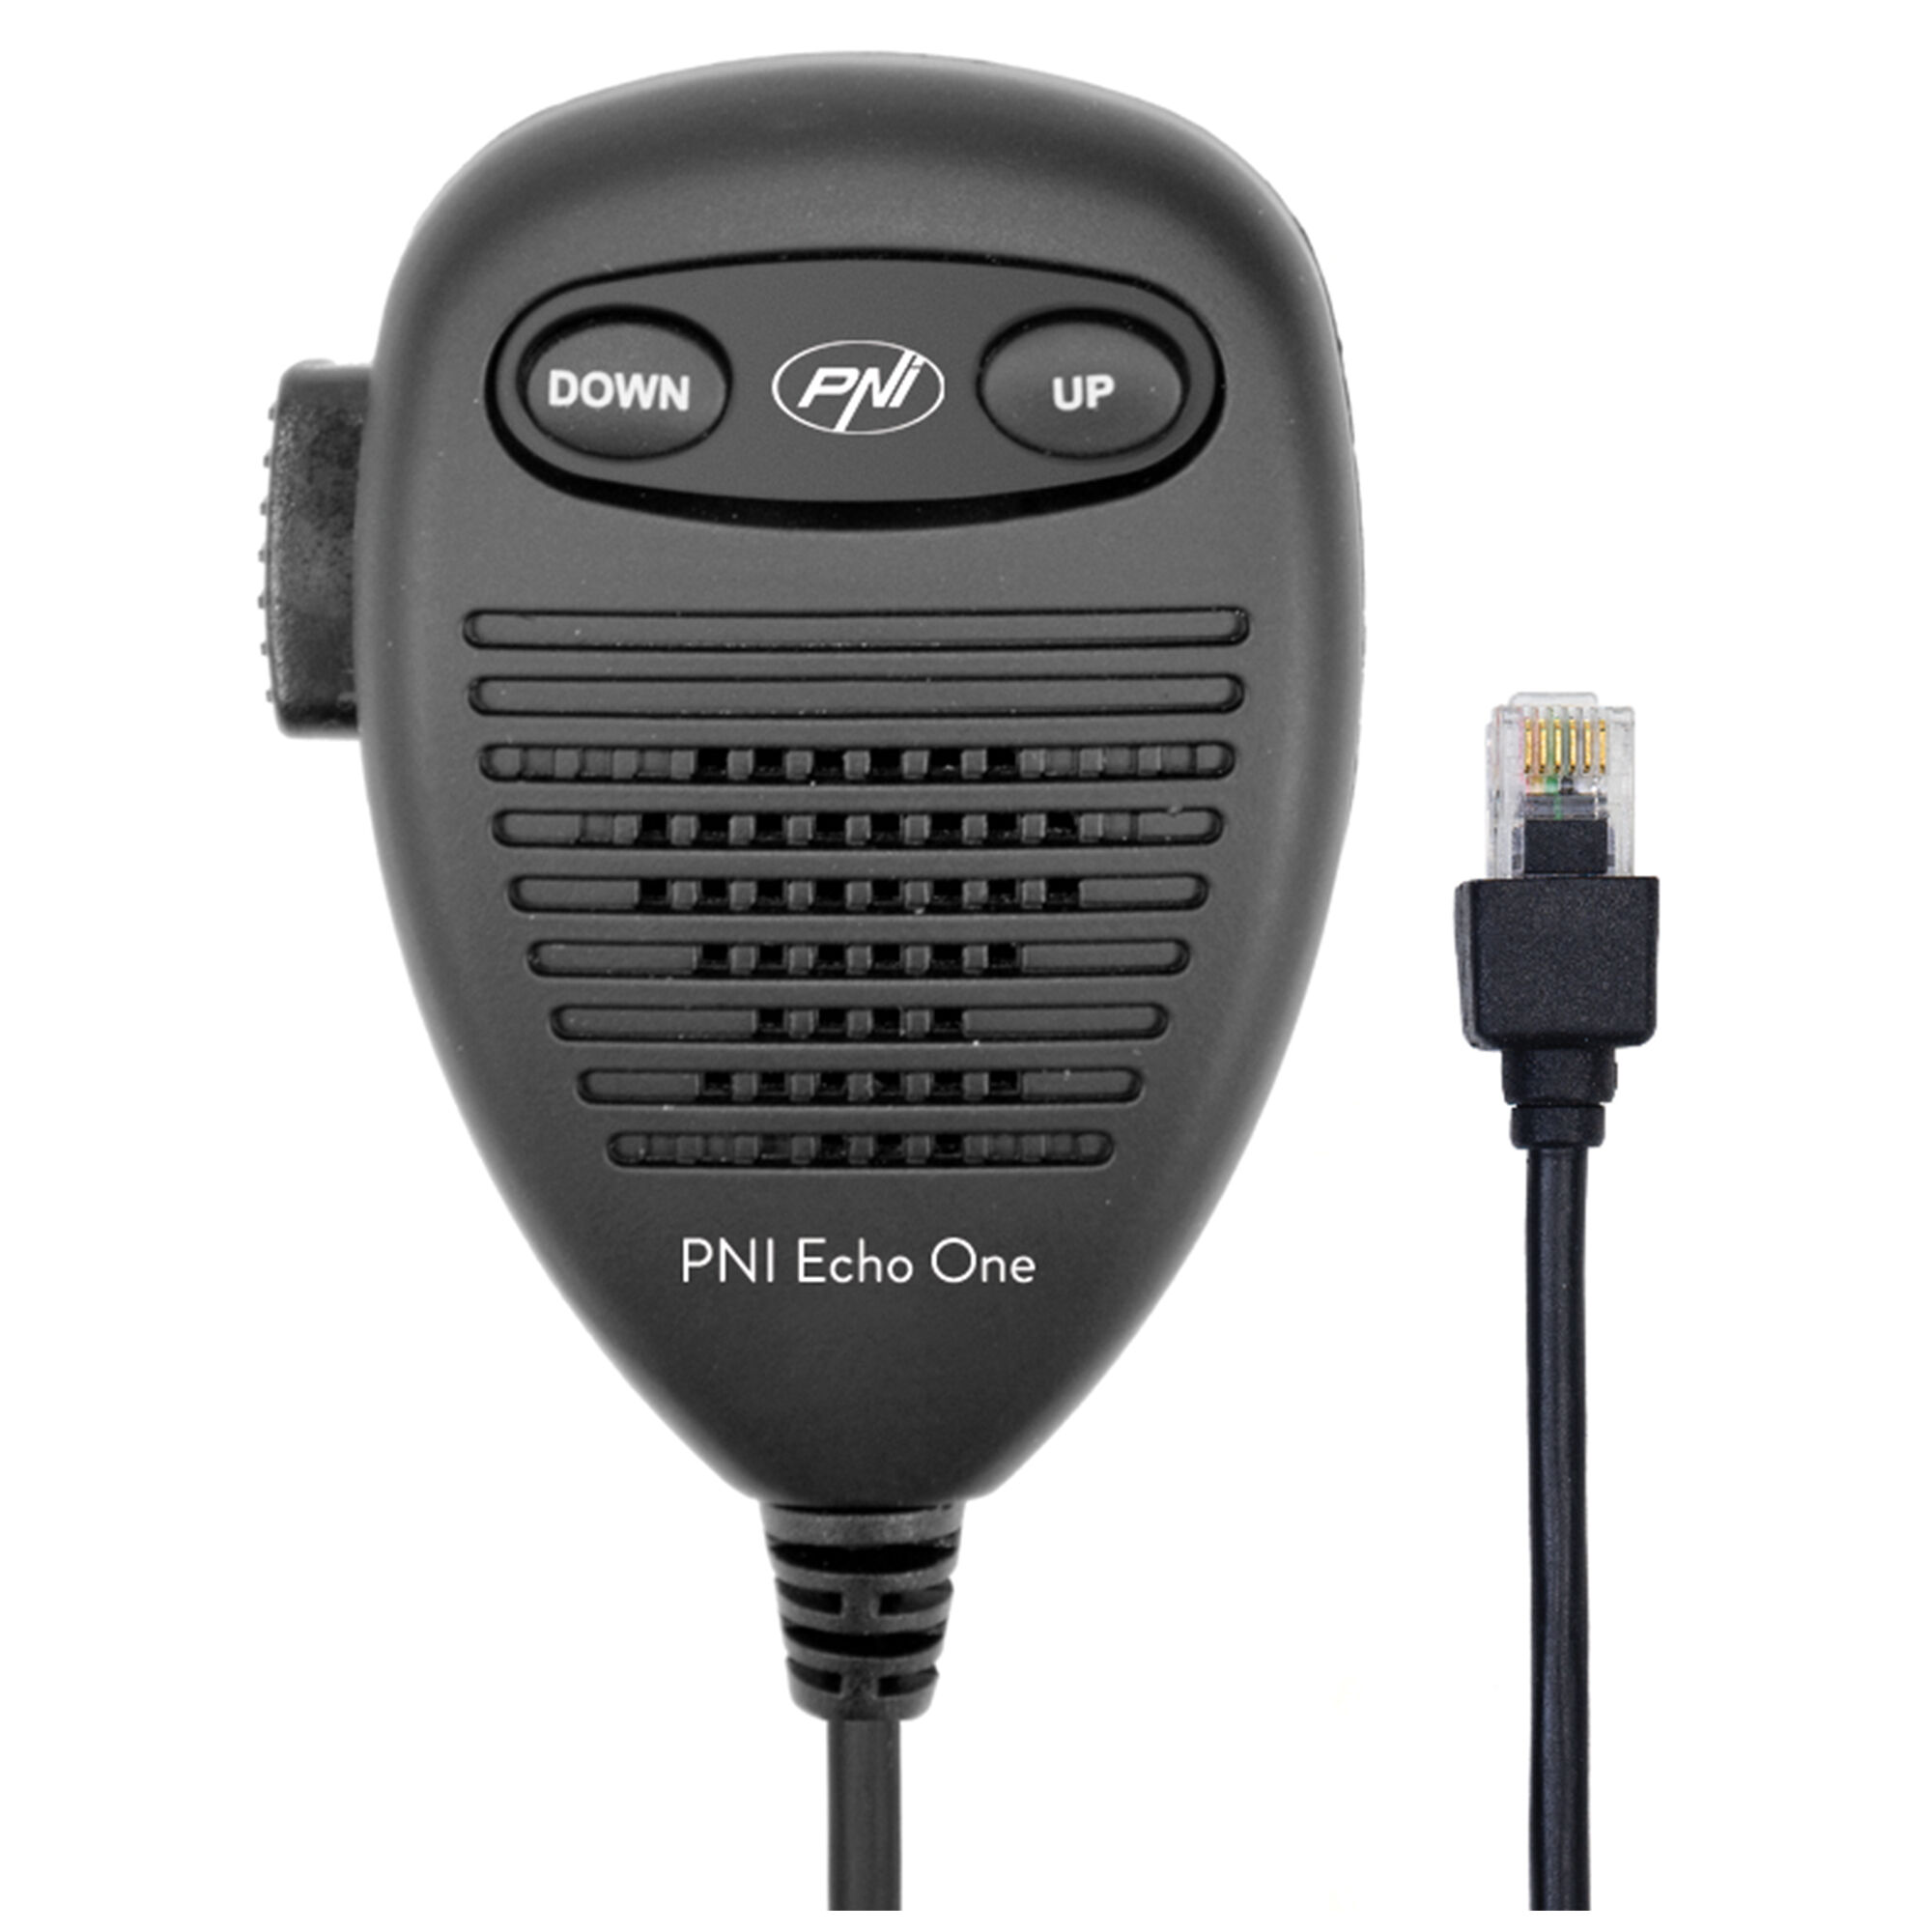 PNI Echo One Mikrofon für PNI HP 6500 und PNI HP 7120